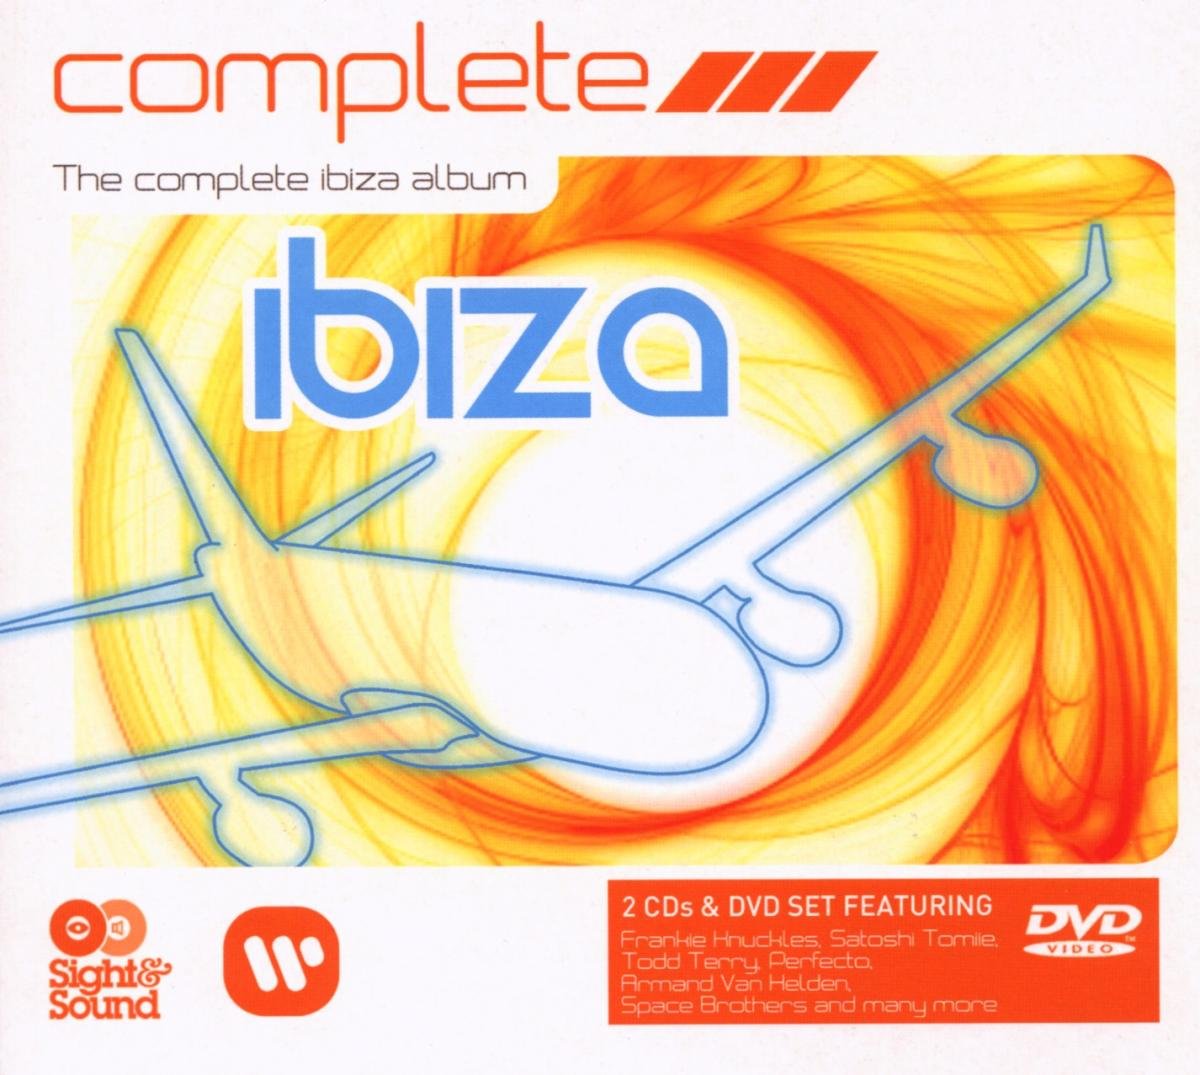 CD Shop - V/A COMPLETE IBIZA